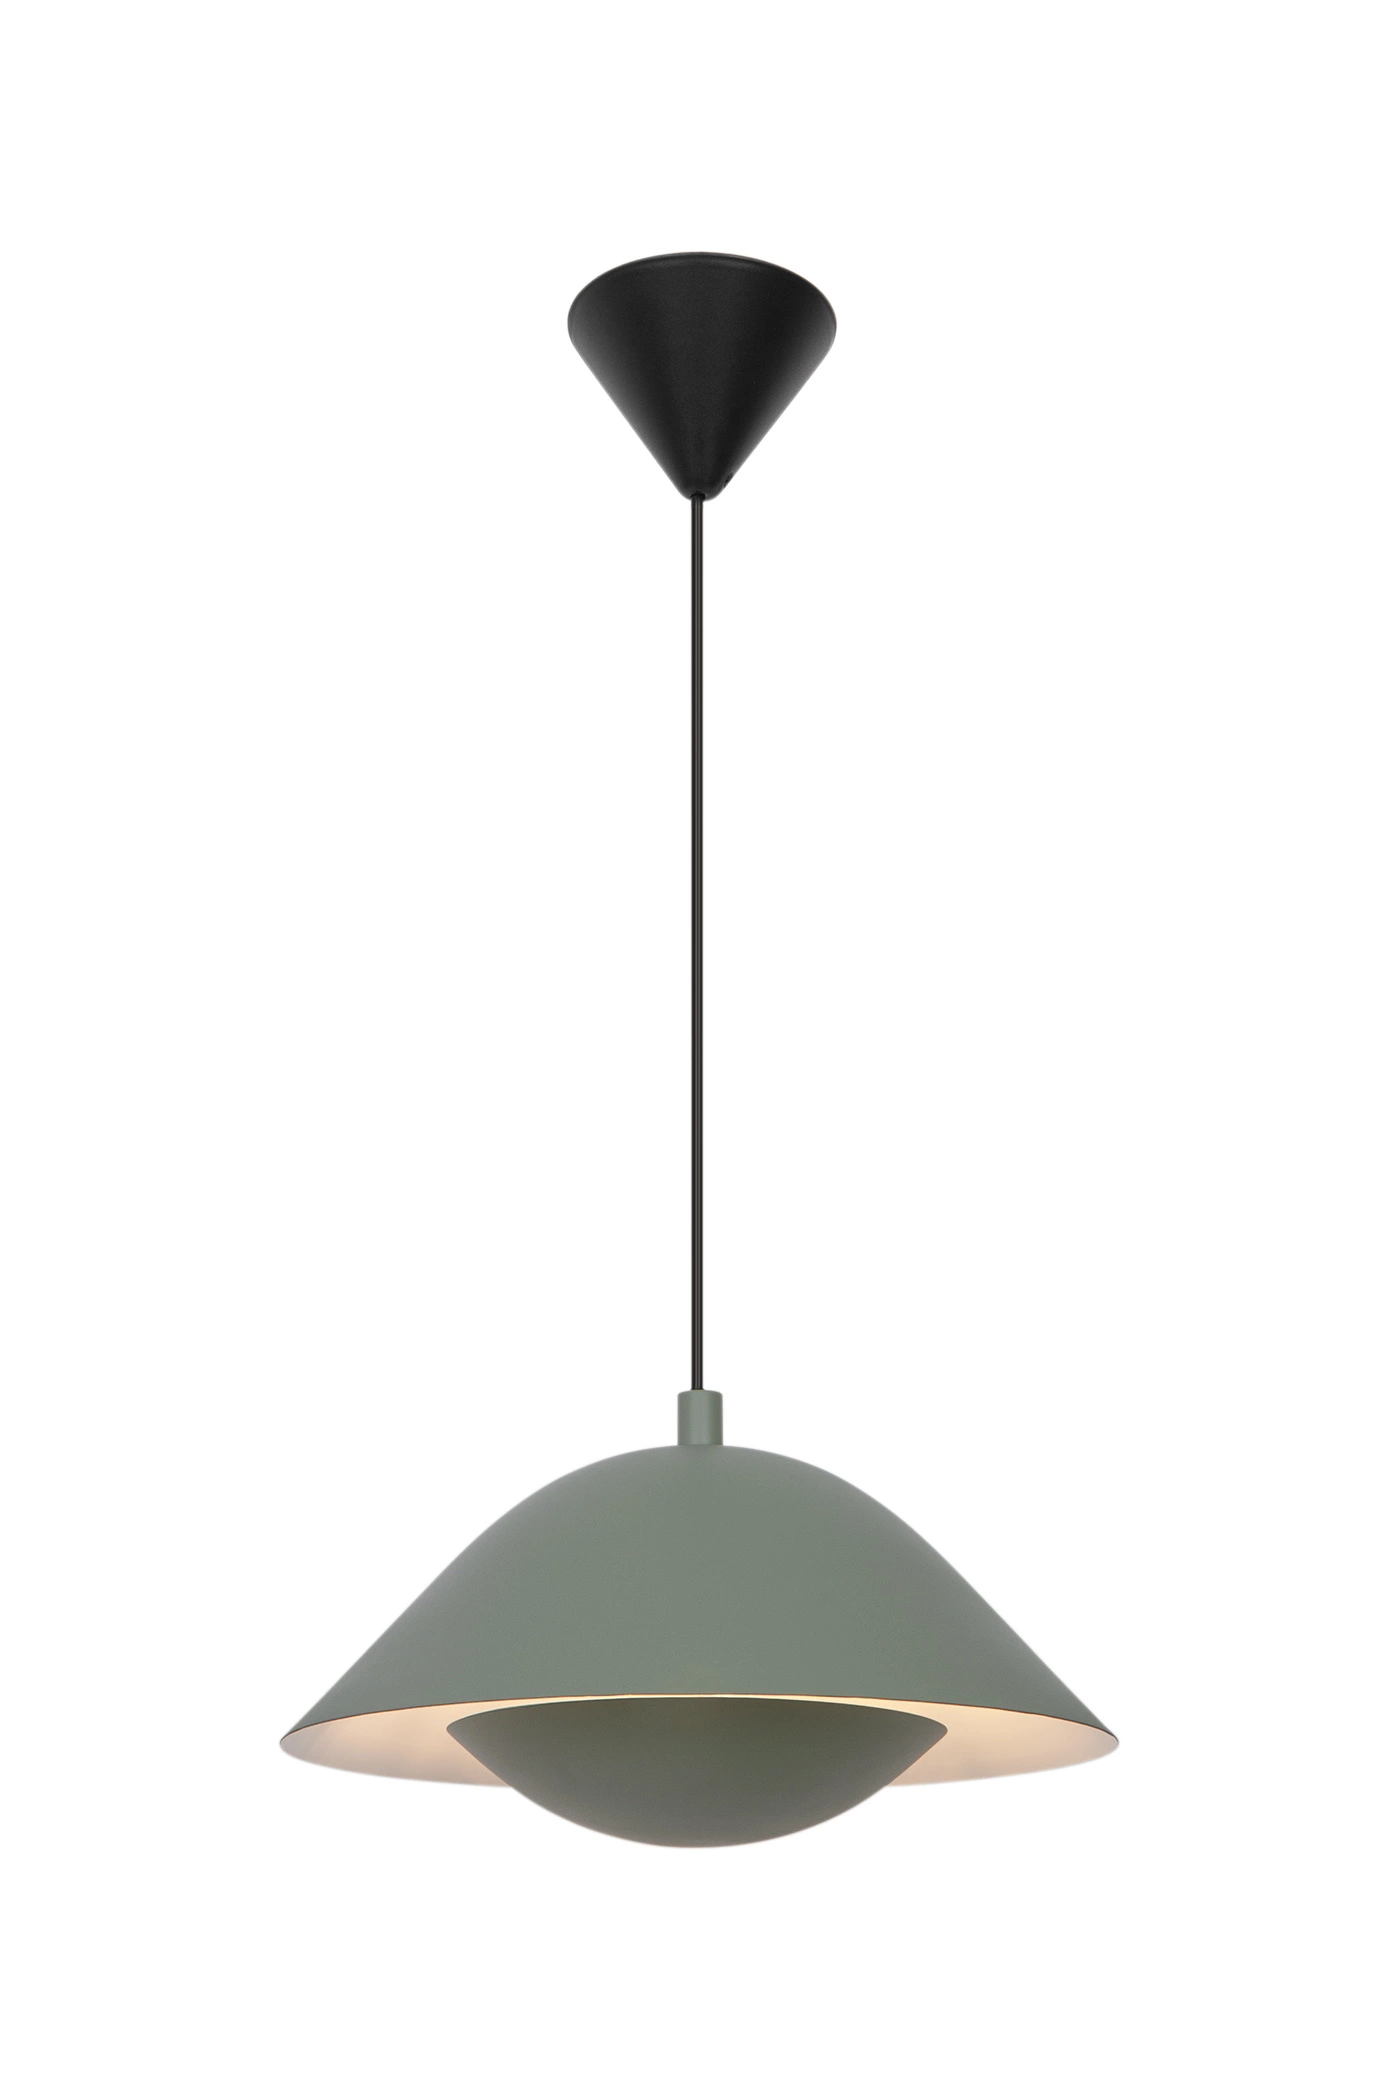   
                        
                        Люстра NORDLUX (Дания) 51216    
                         в стиле Лофт, Скандинавский.  
                        Тип источника света: светодиодная лампа, сменная.                         Форма: Круг.                         Цвета плафонов и подвесок: Зеленый.                         Материал: Металл.                          фото 1